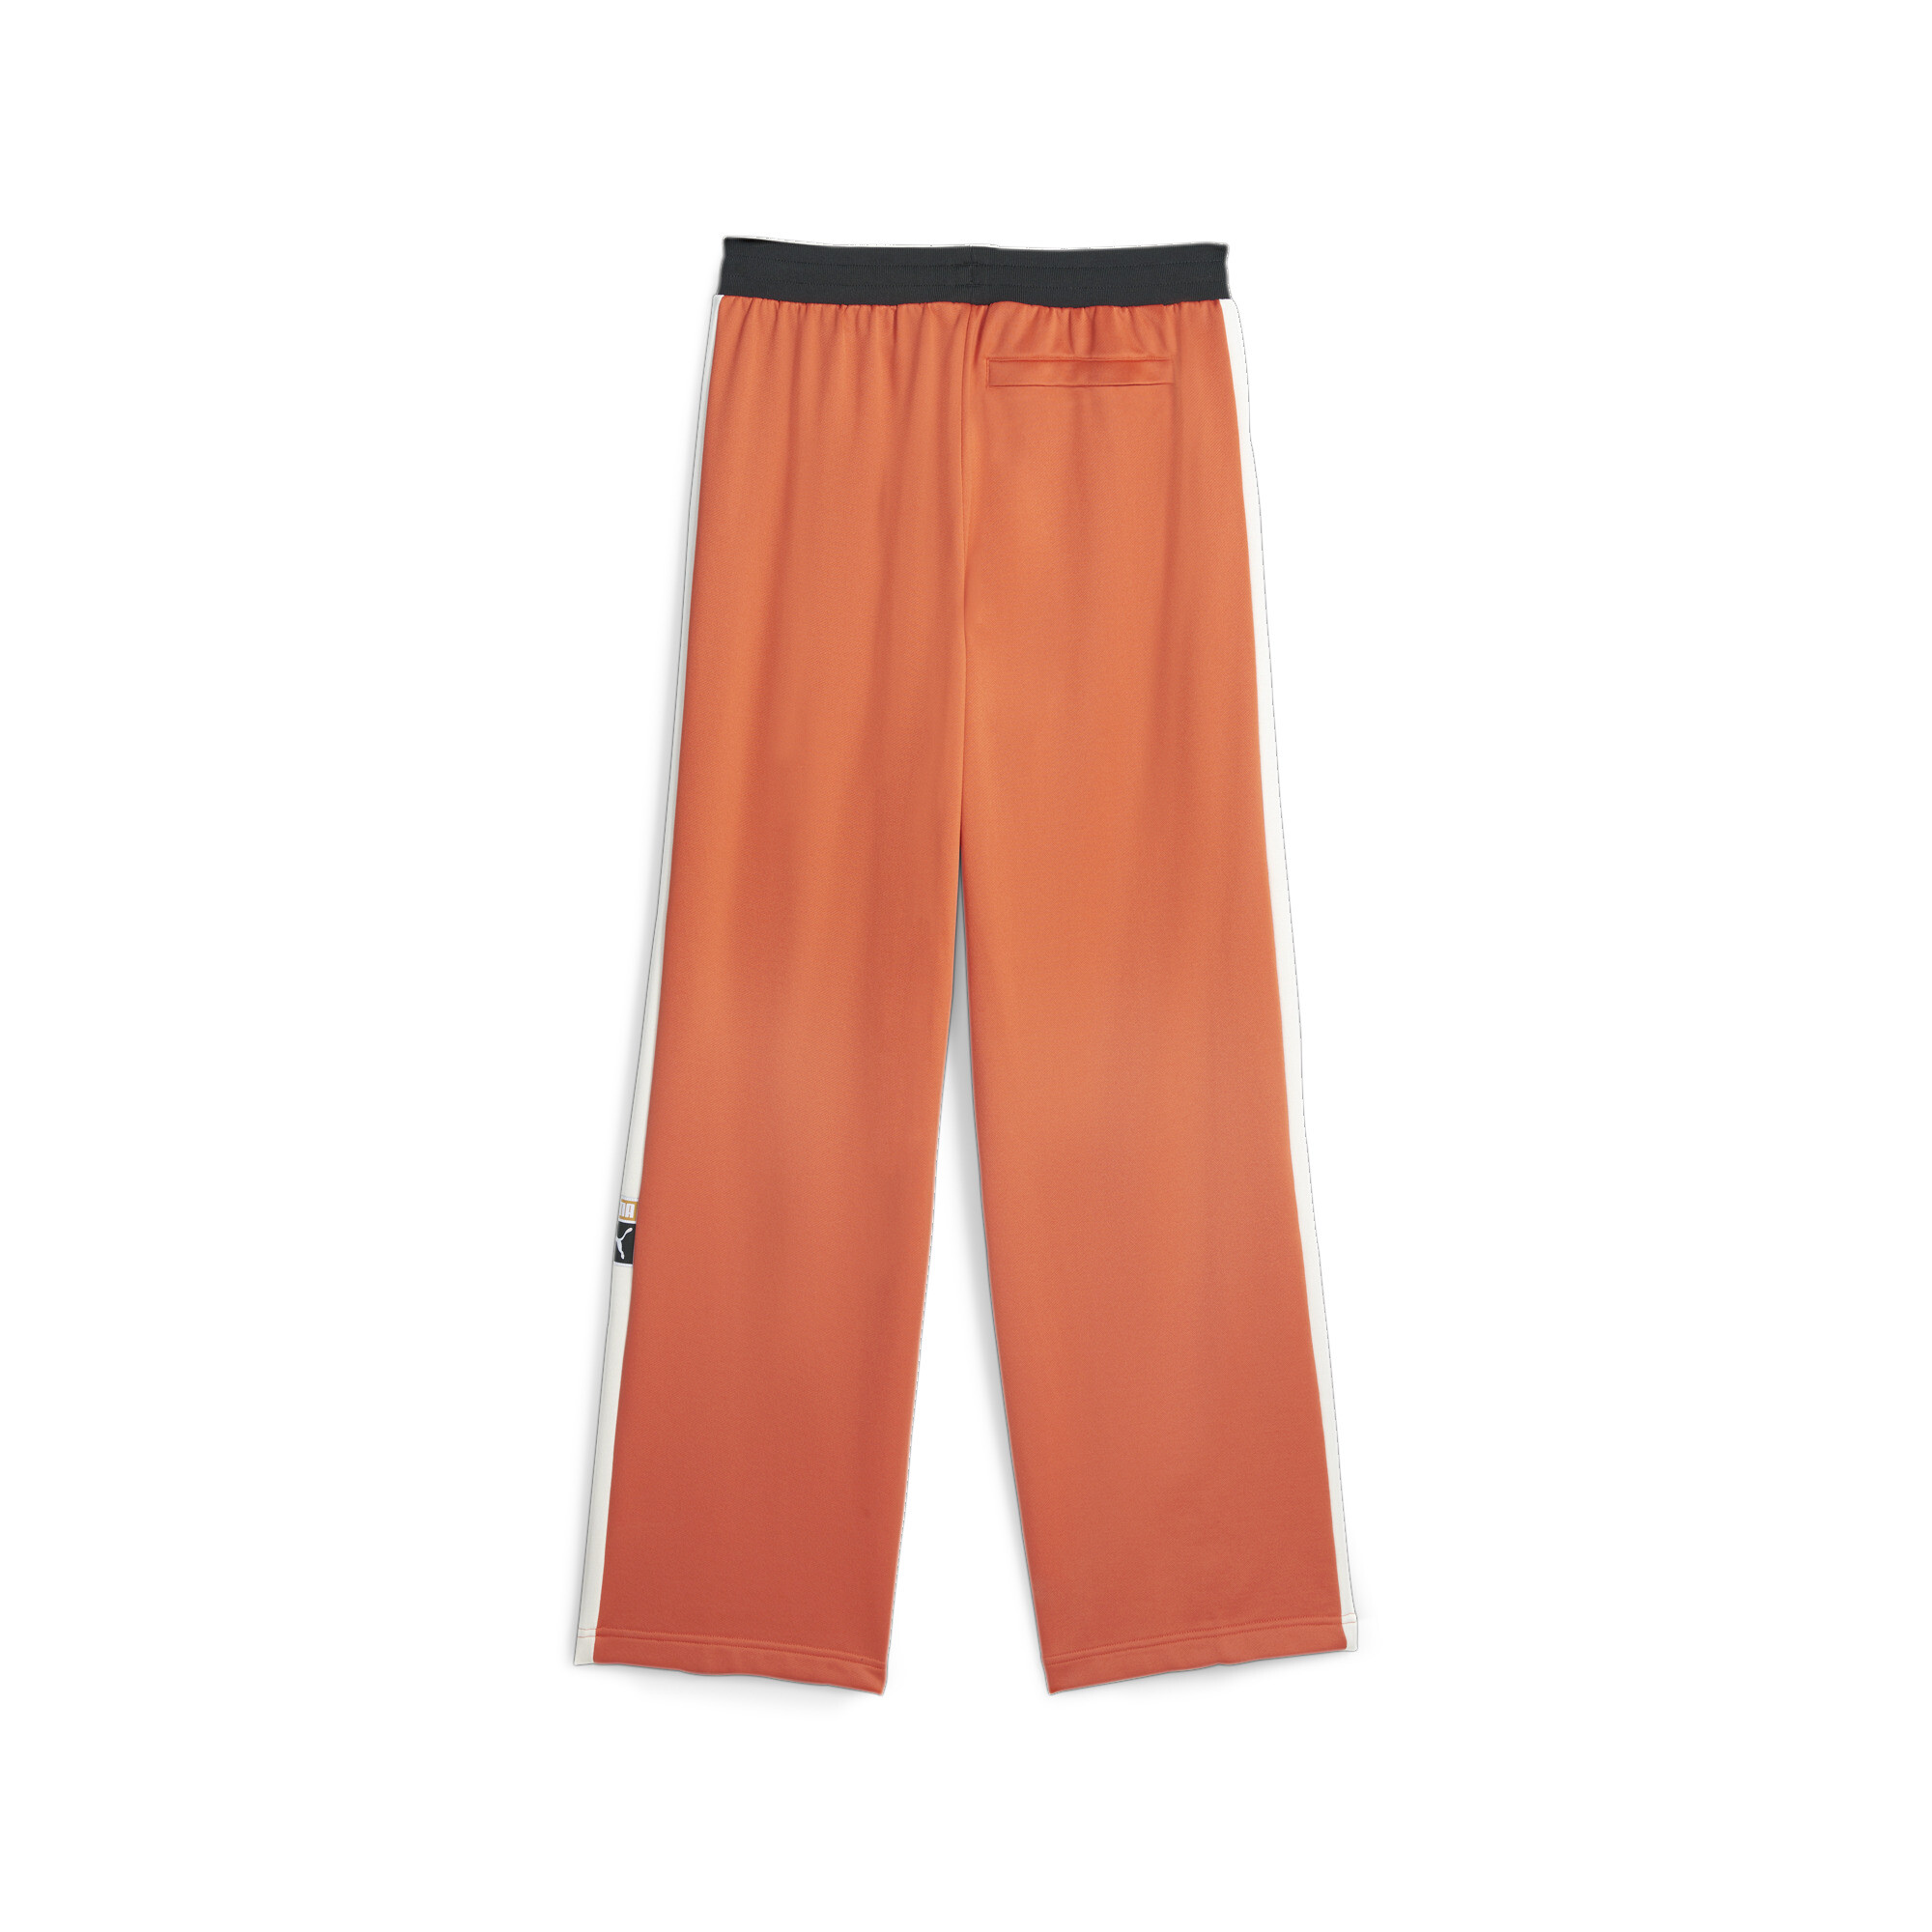 Men's Puma T7's Track Pants, Orange, Size L, Clothing